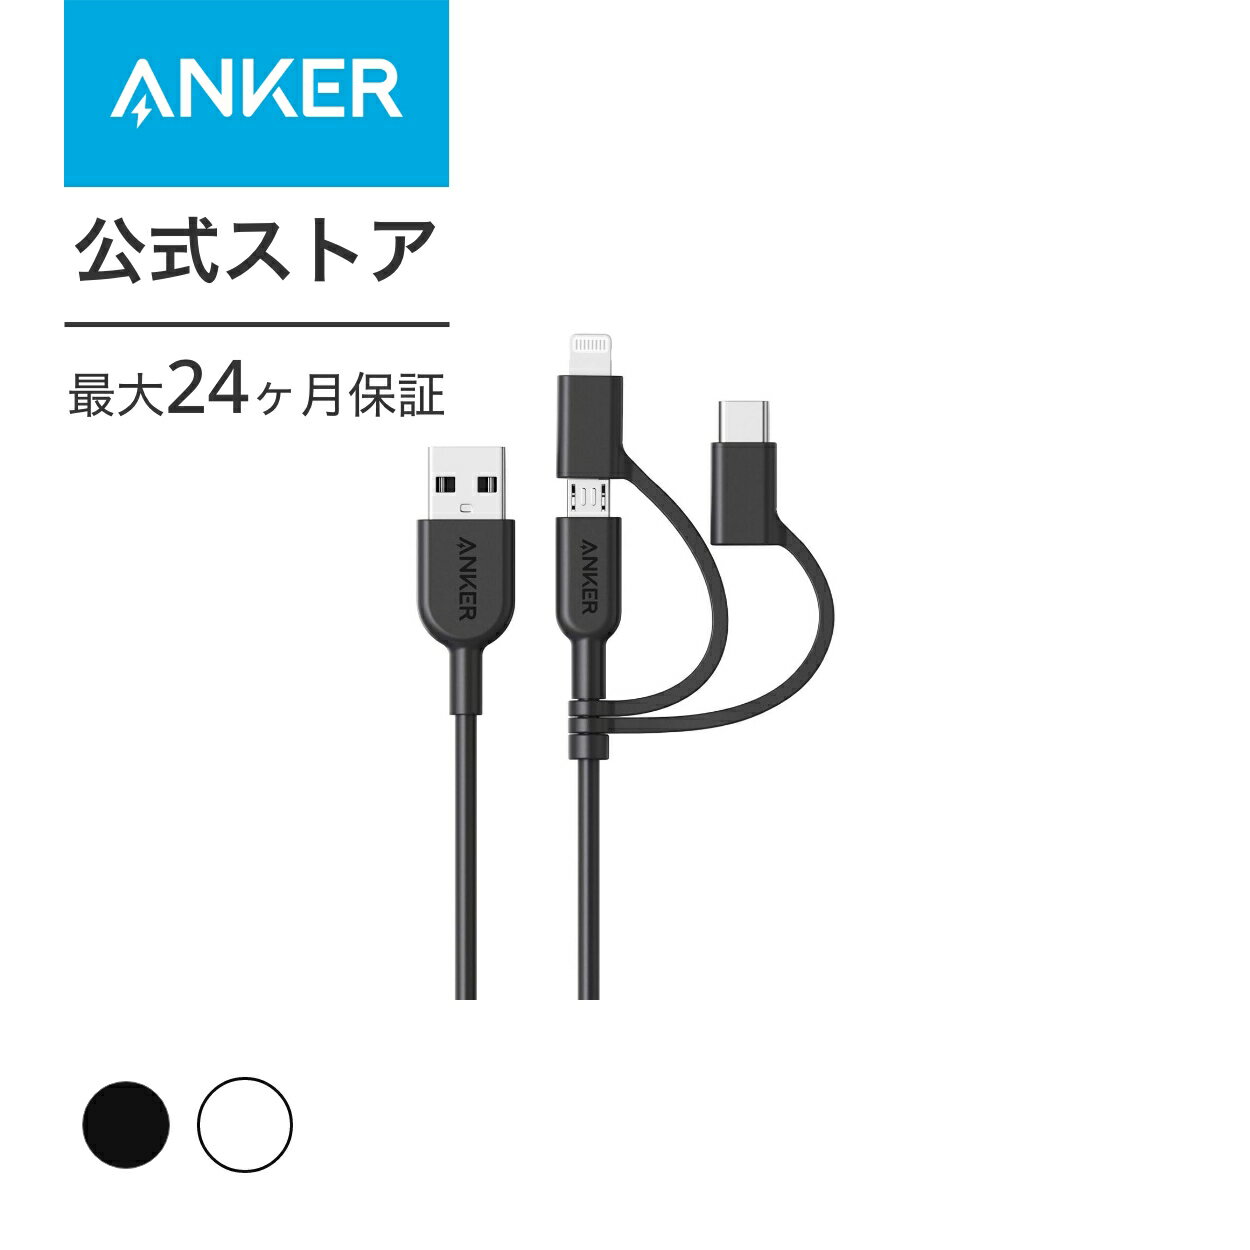 Anker PowerLine II 3-in-1 ケーブル（ライトニングUSB/USB-C/Micro USB端子対応ケーブル）iPhone XS/XS Max/XR 対応 (0.9m ブラック・ホワイト)